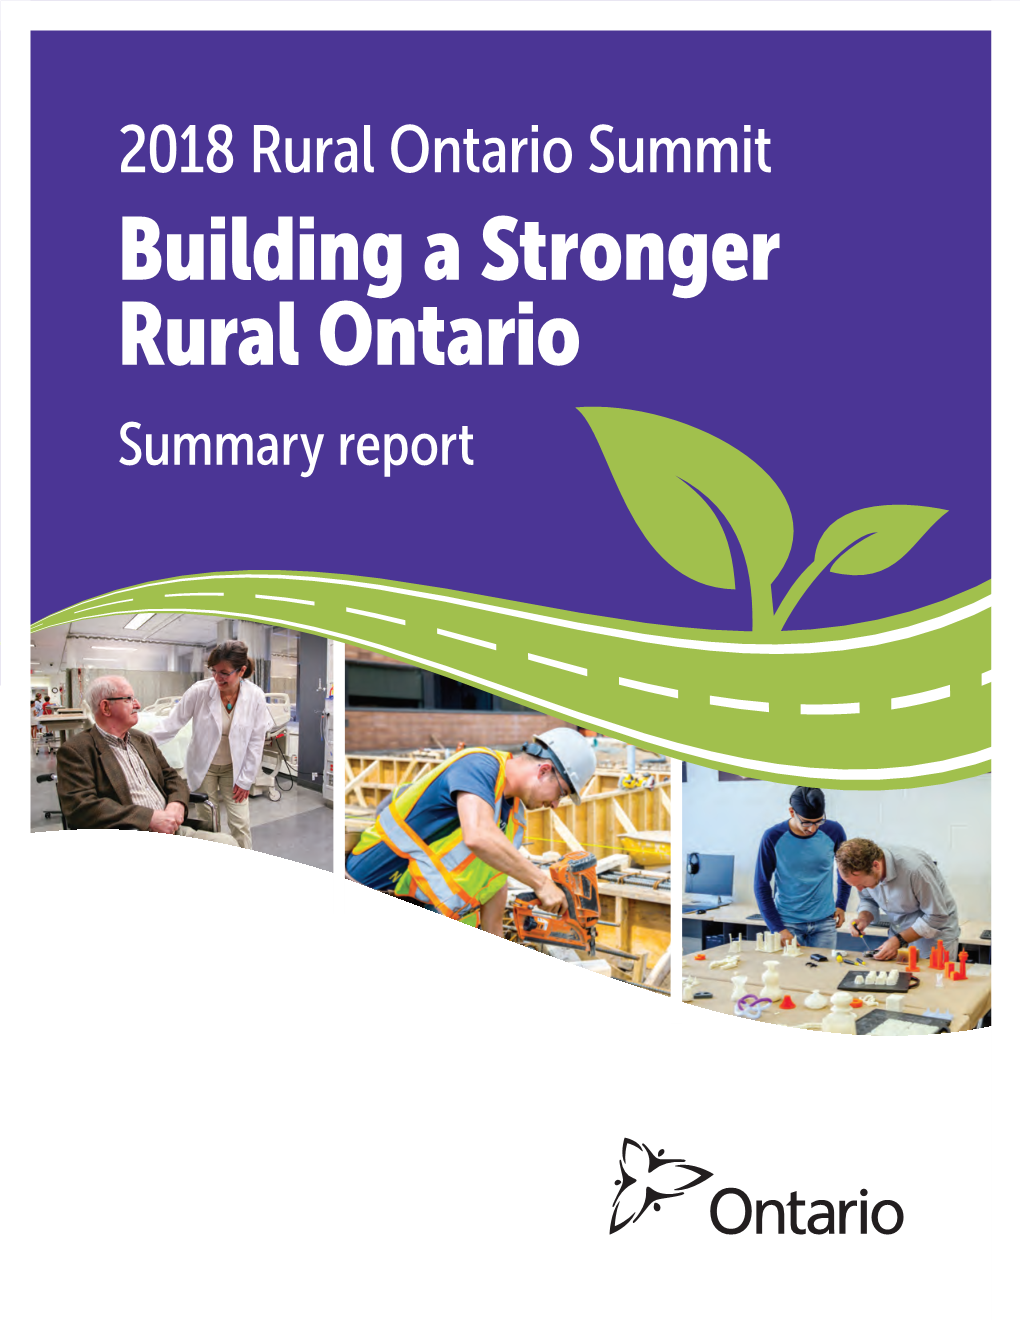 2018 Rural Ontario Summit Building a Stronger Rural Ontario Summary Report